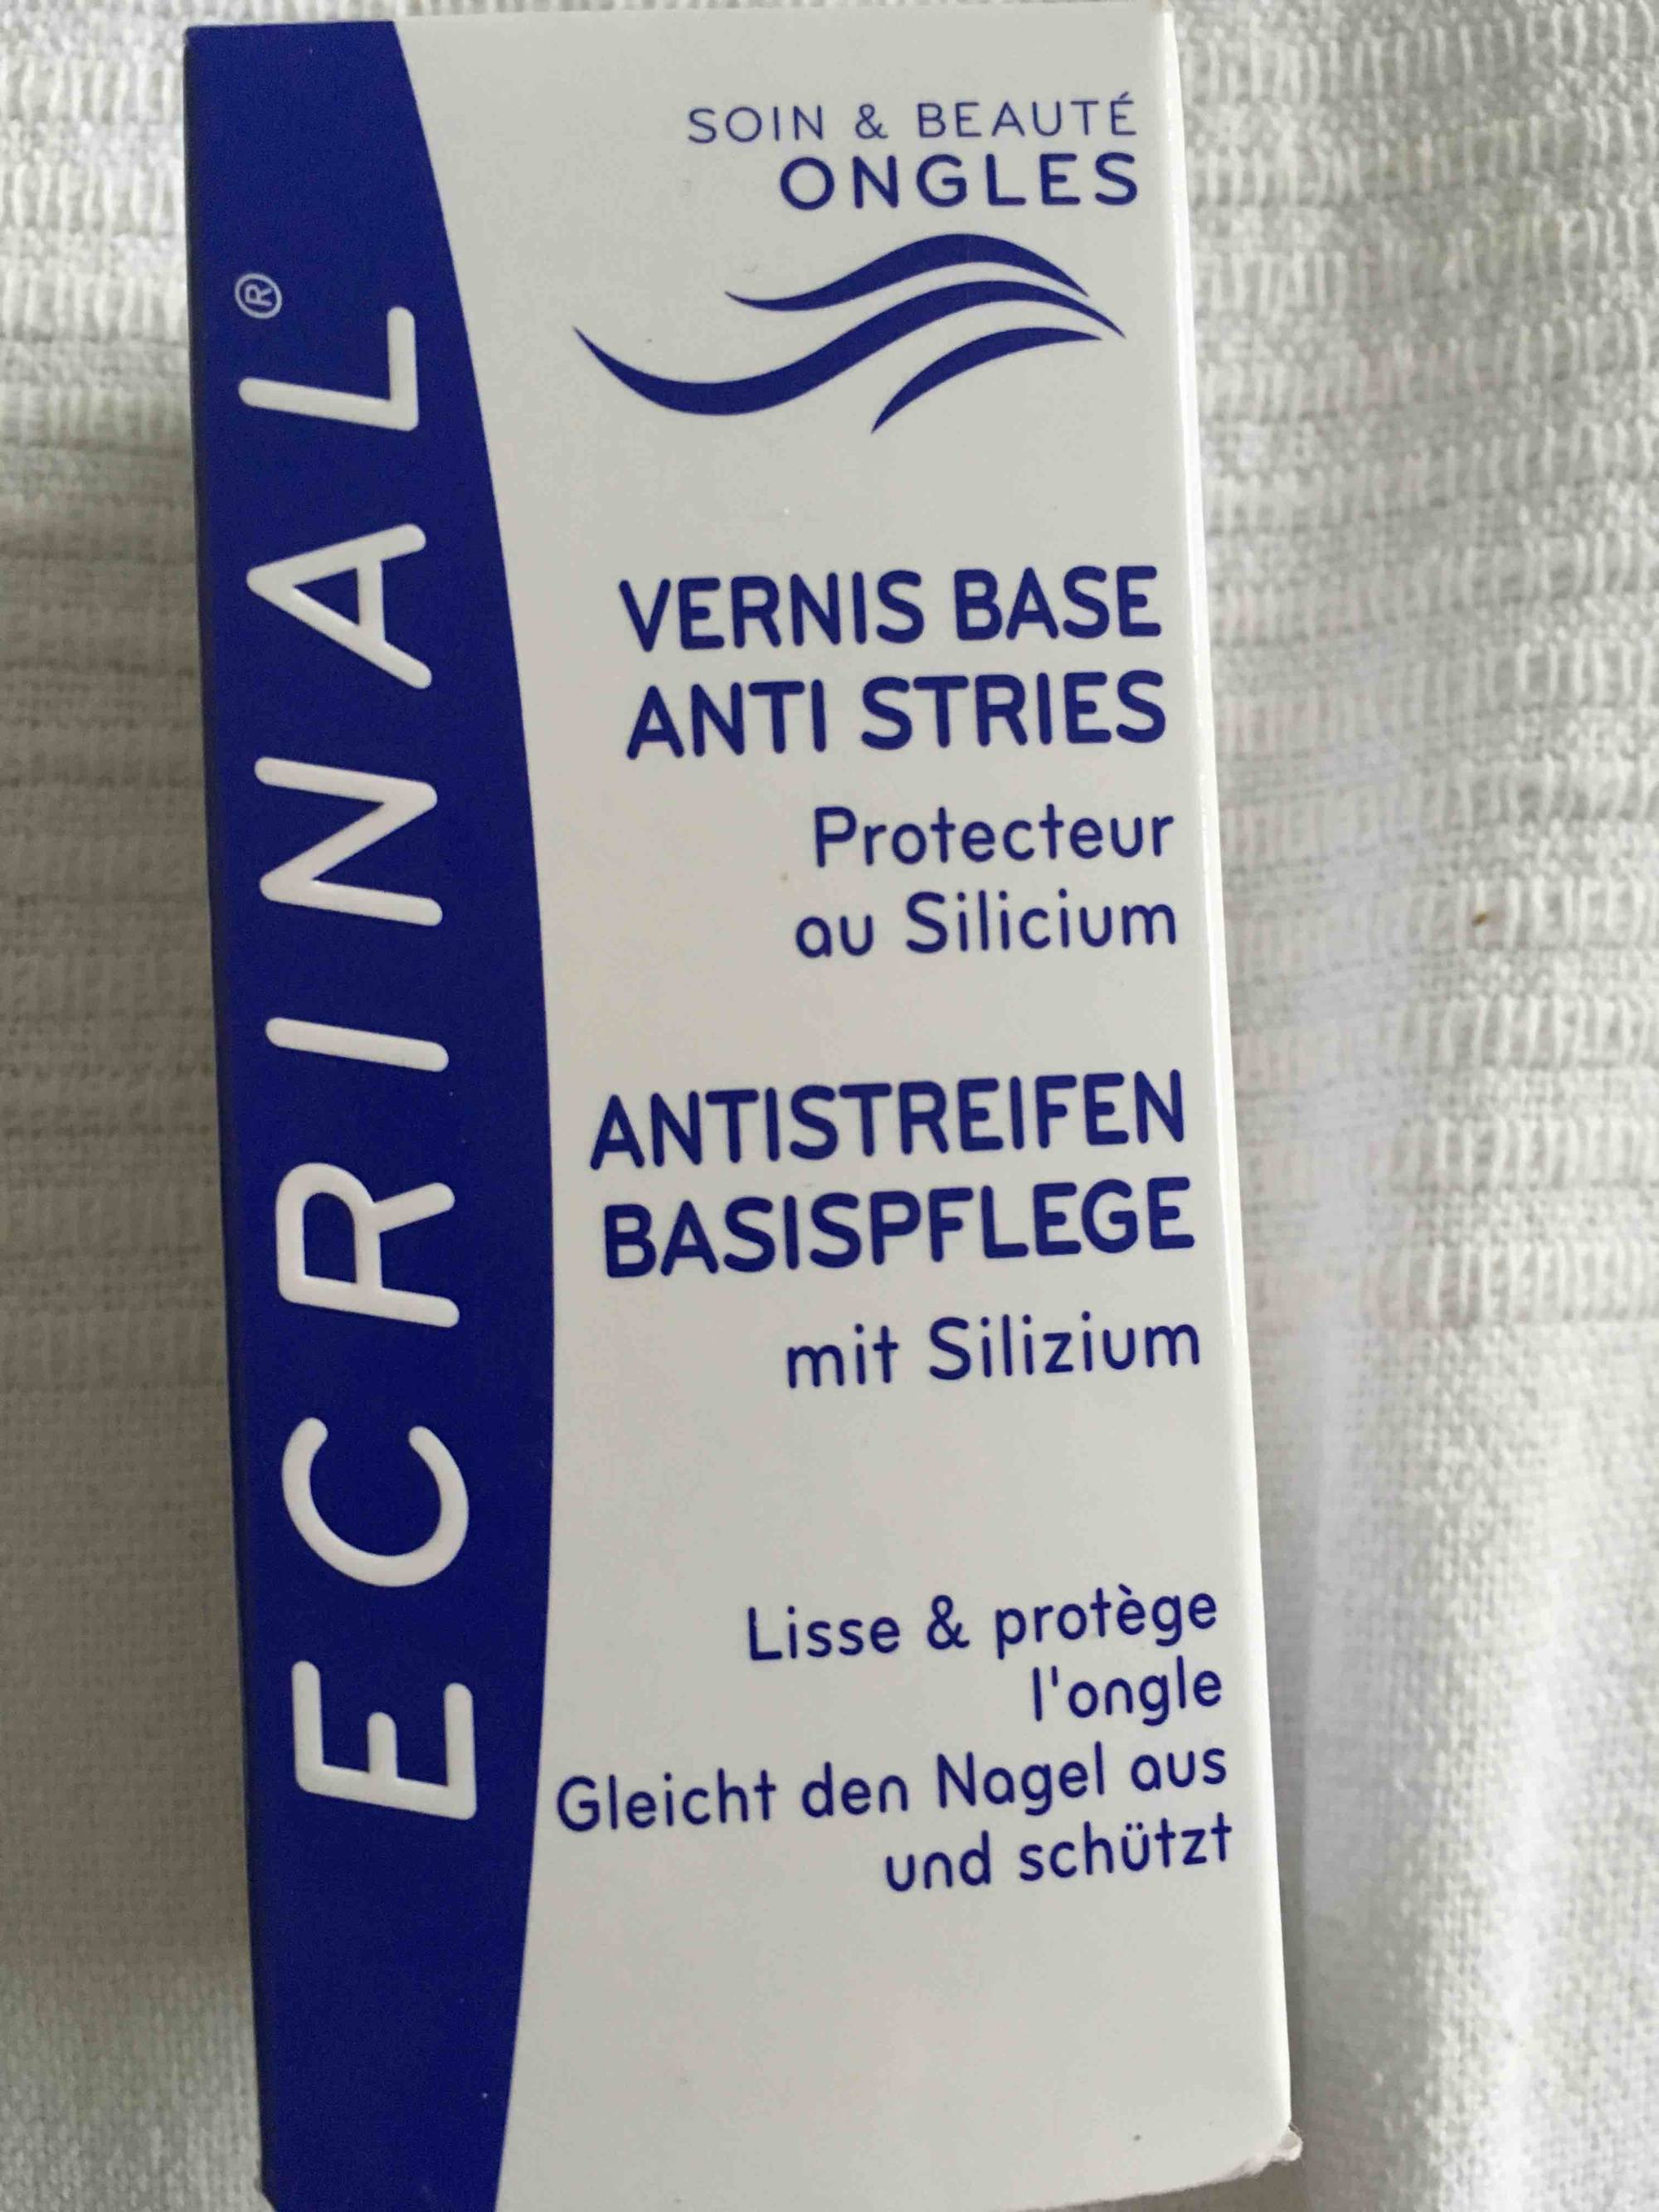 ECRINAL - Soin & beauté ongles - Vernis base anti stries